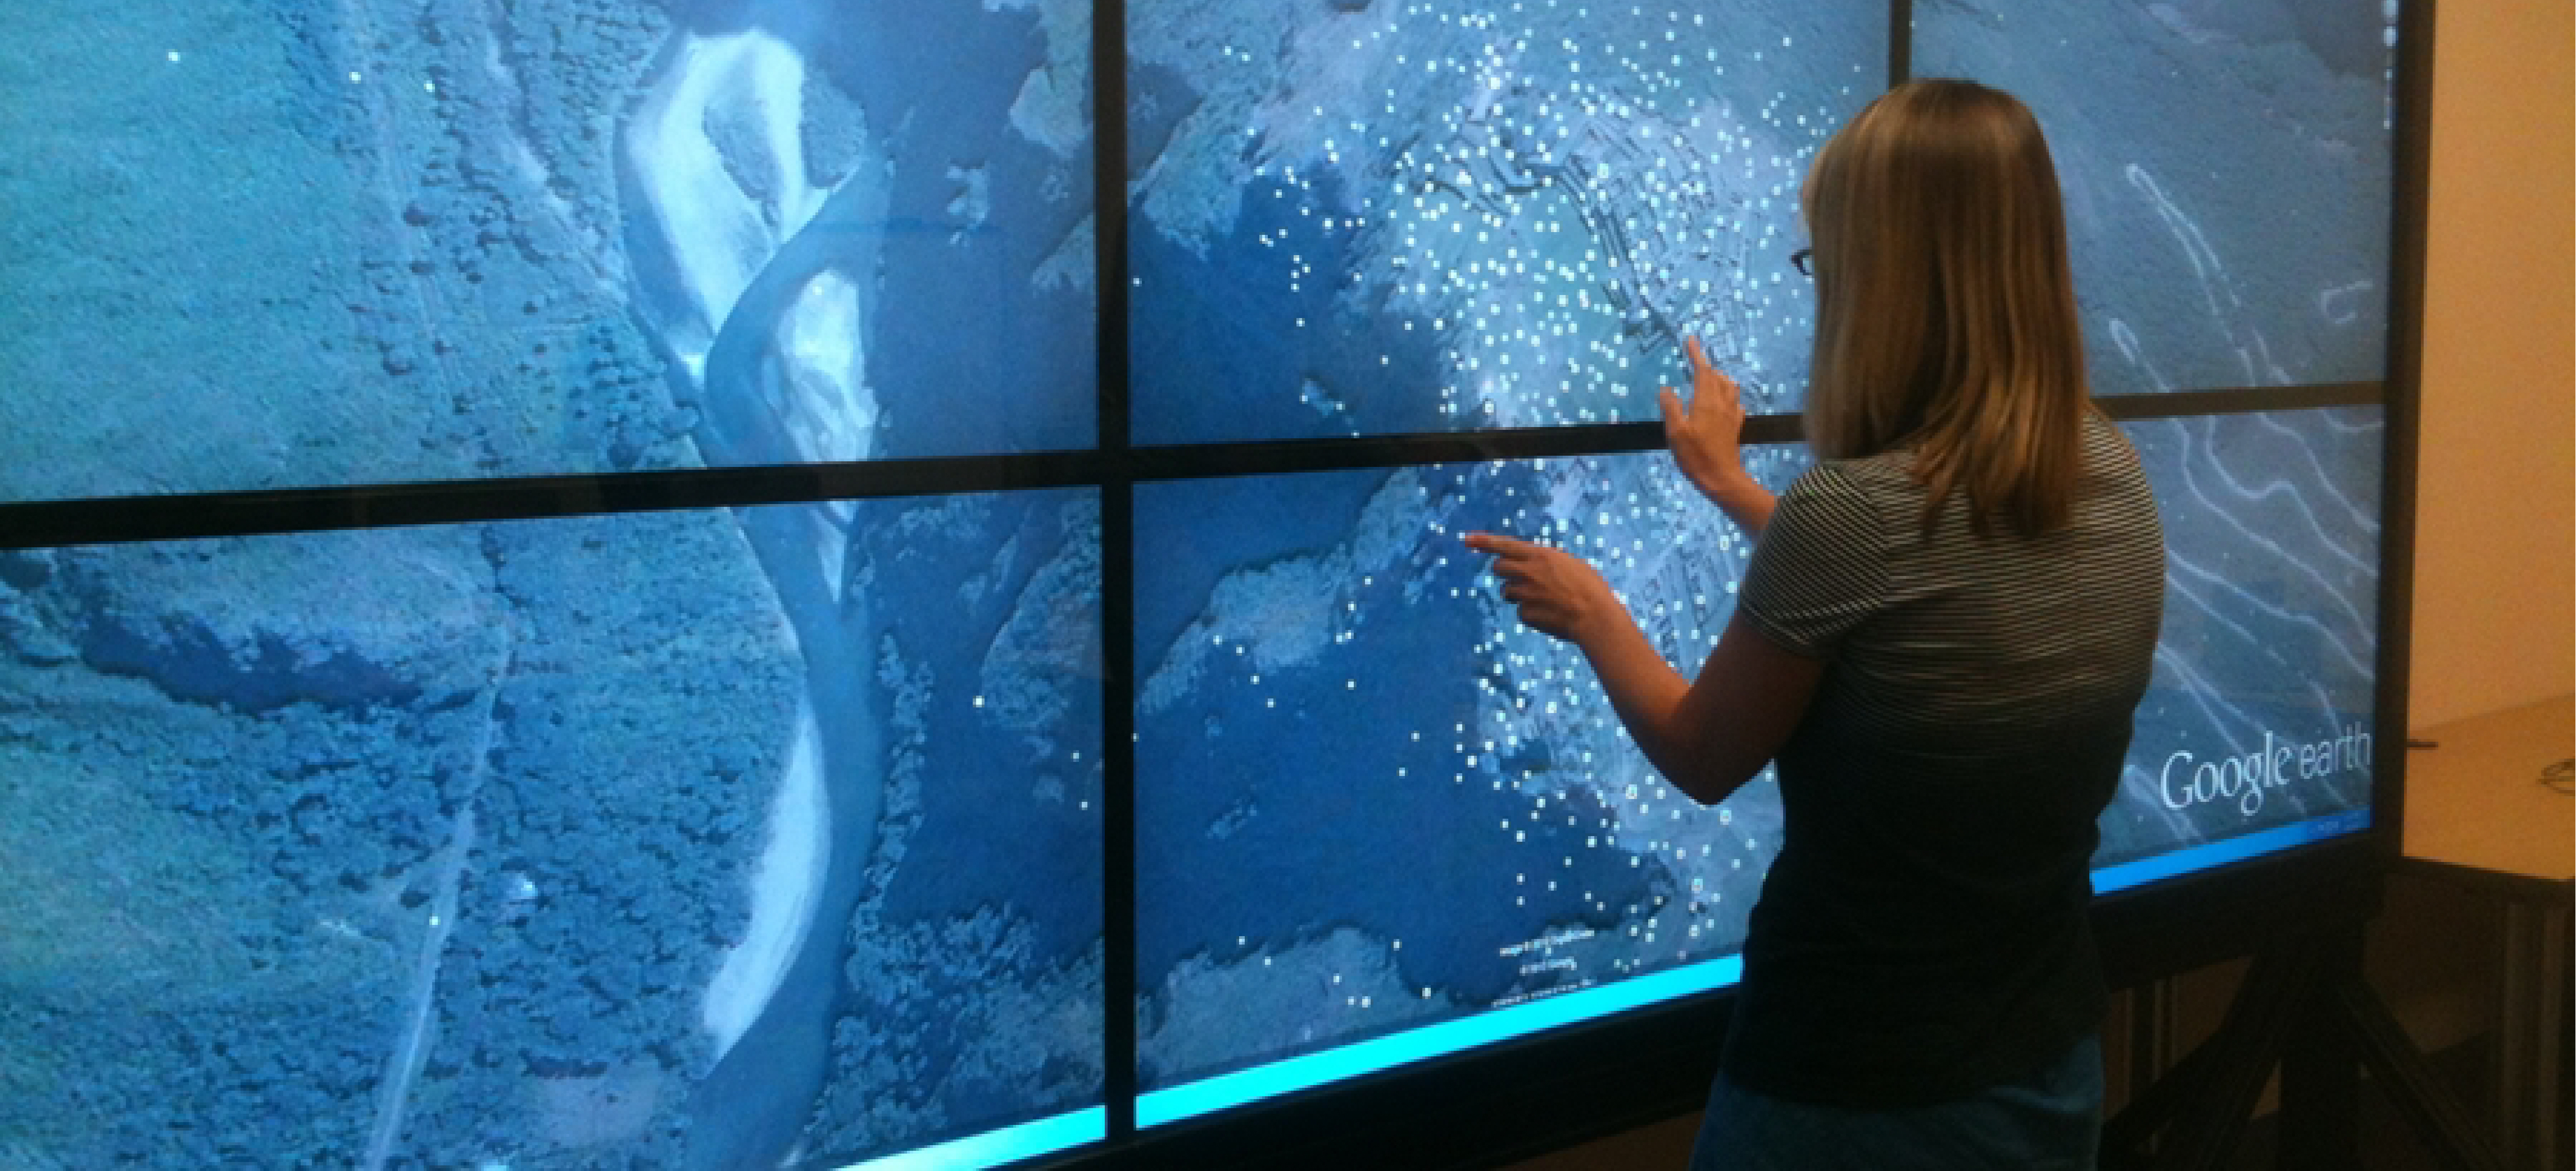 CAST Researcher Angie Payne demonstrates Google Earth using RazorVUE